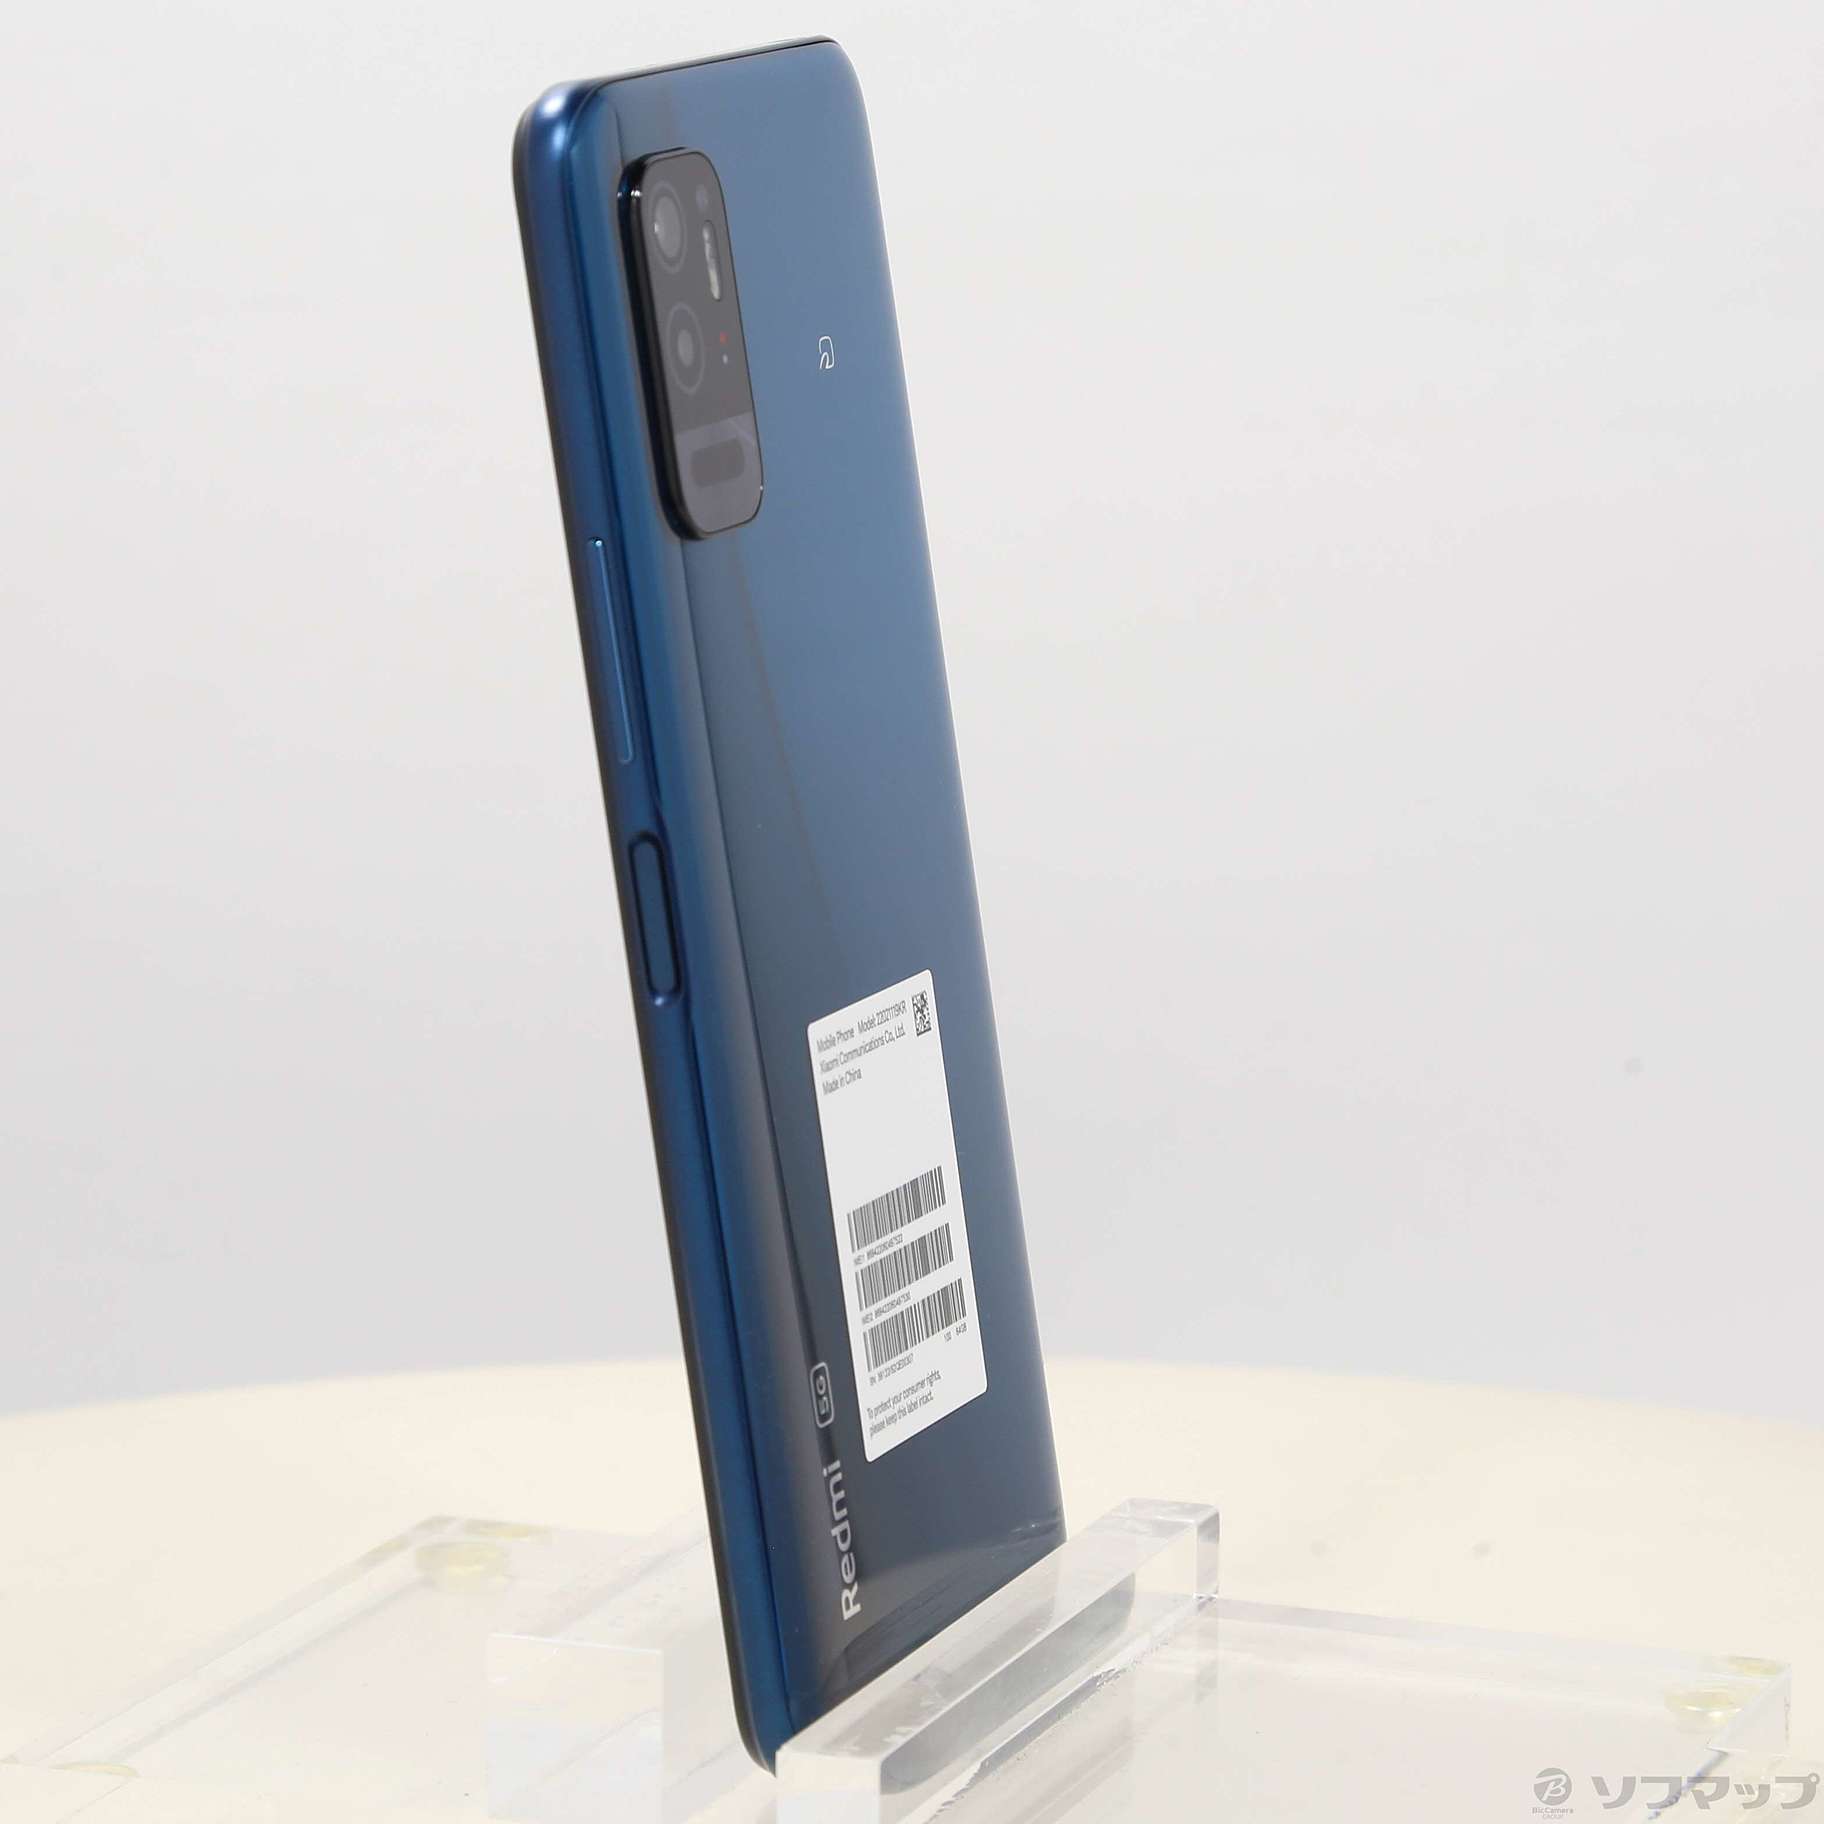 Redmi Note 10T レイクブルー 64 GB SIMフリー